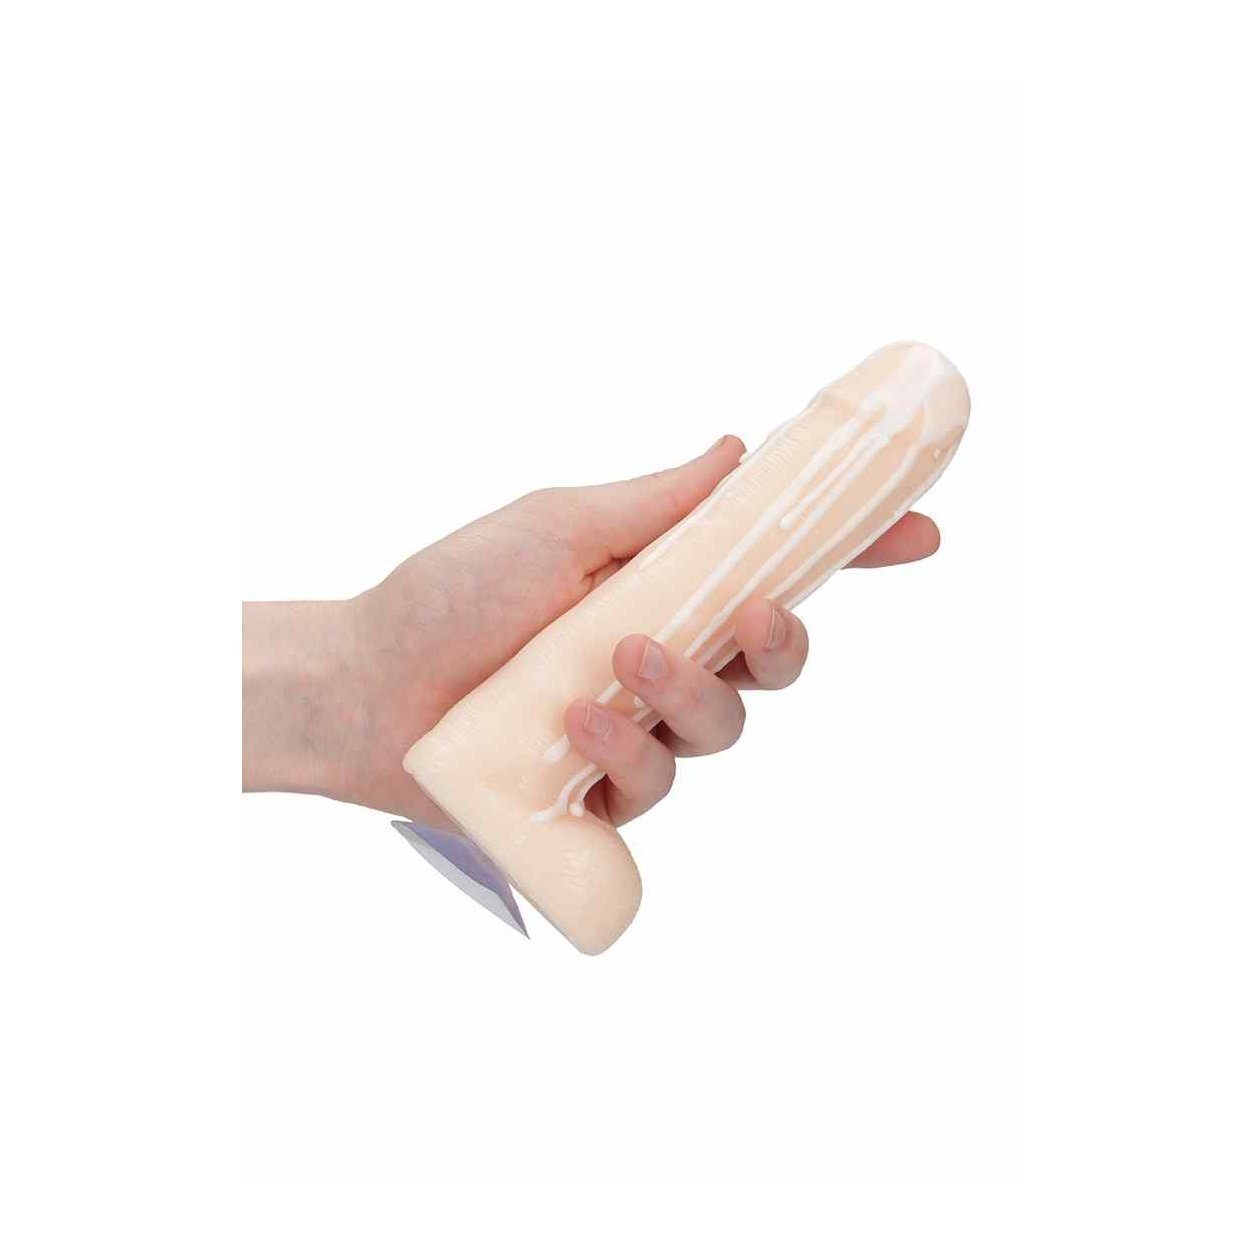 Dicky Flesh Shots Seife Toys Handseife Soap Penisform in